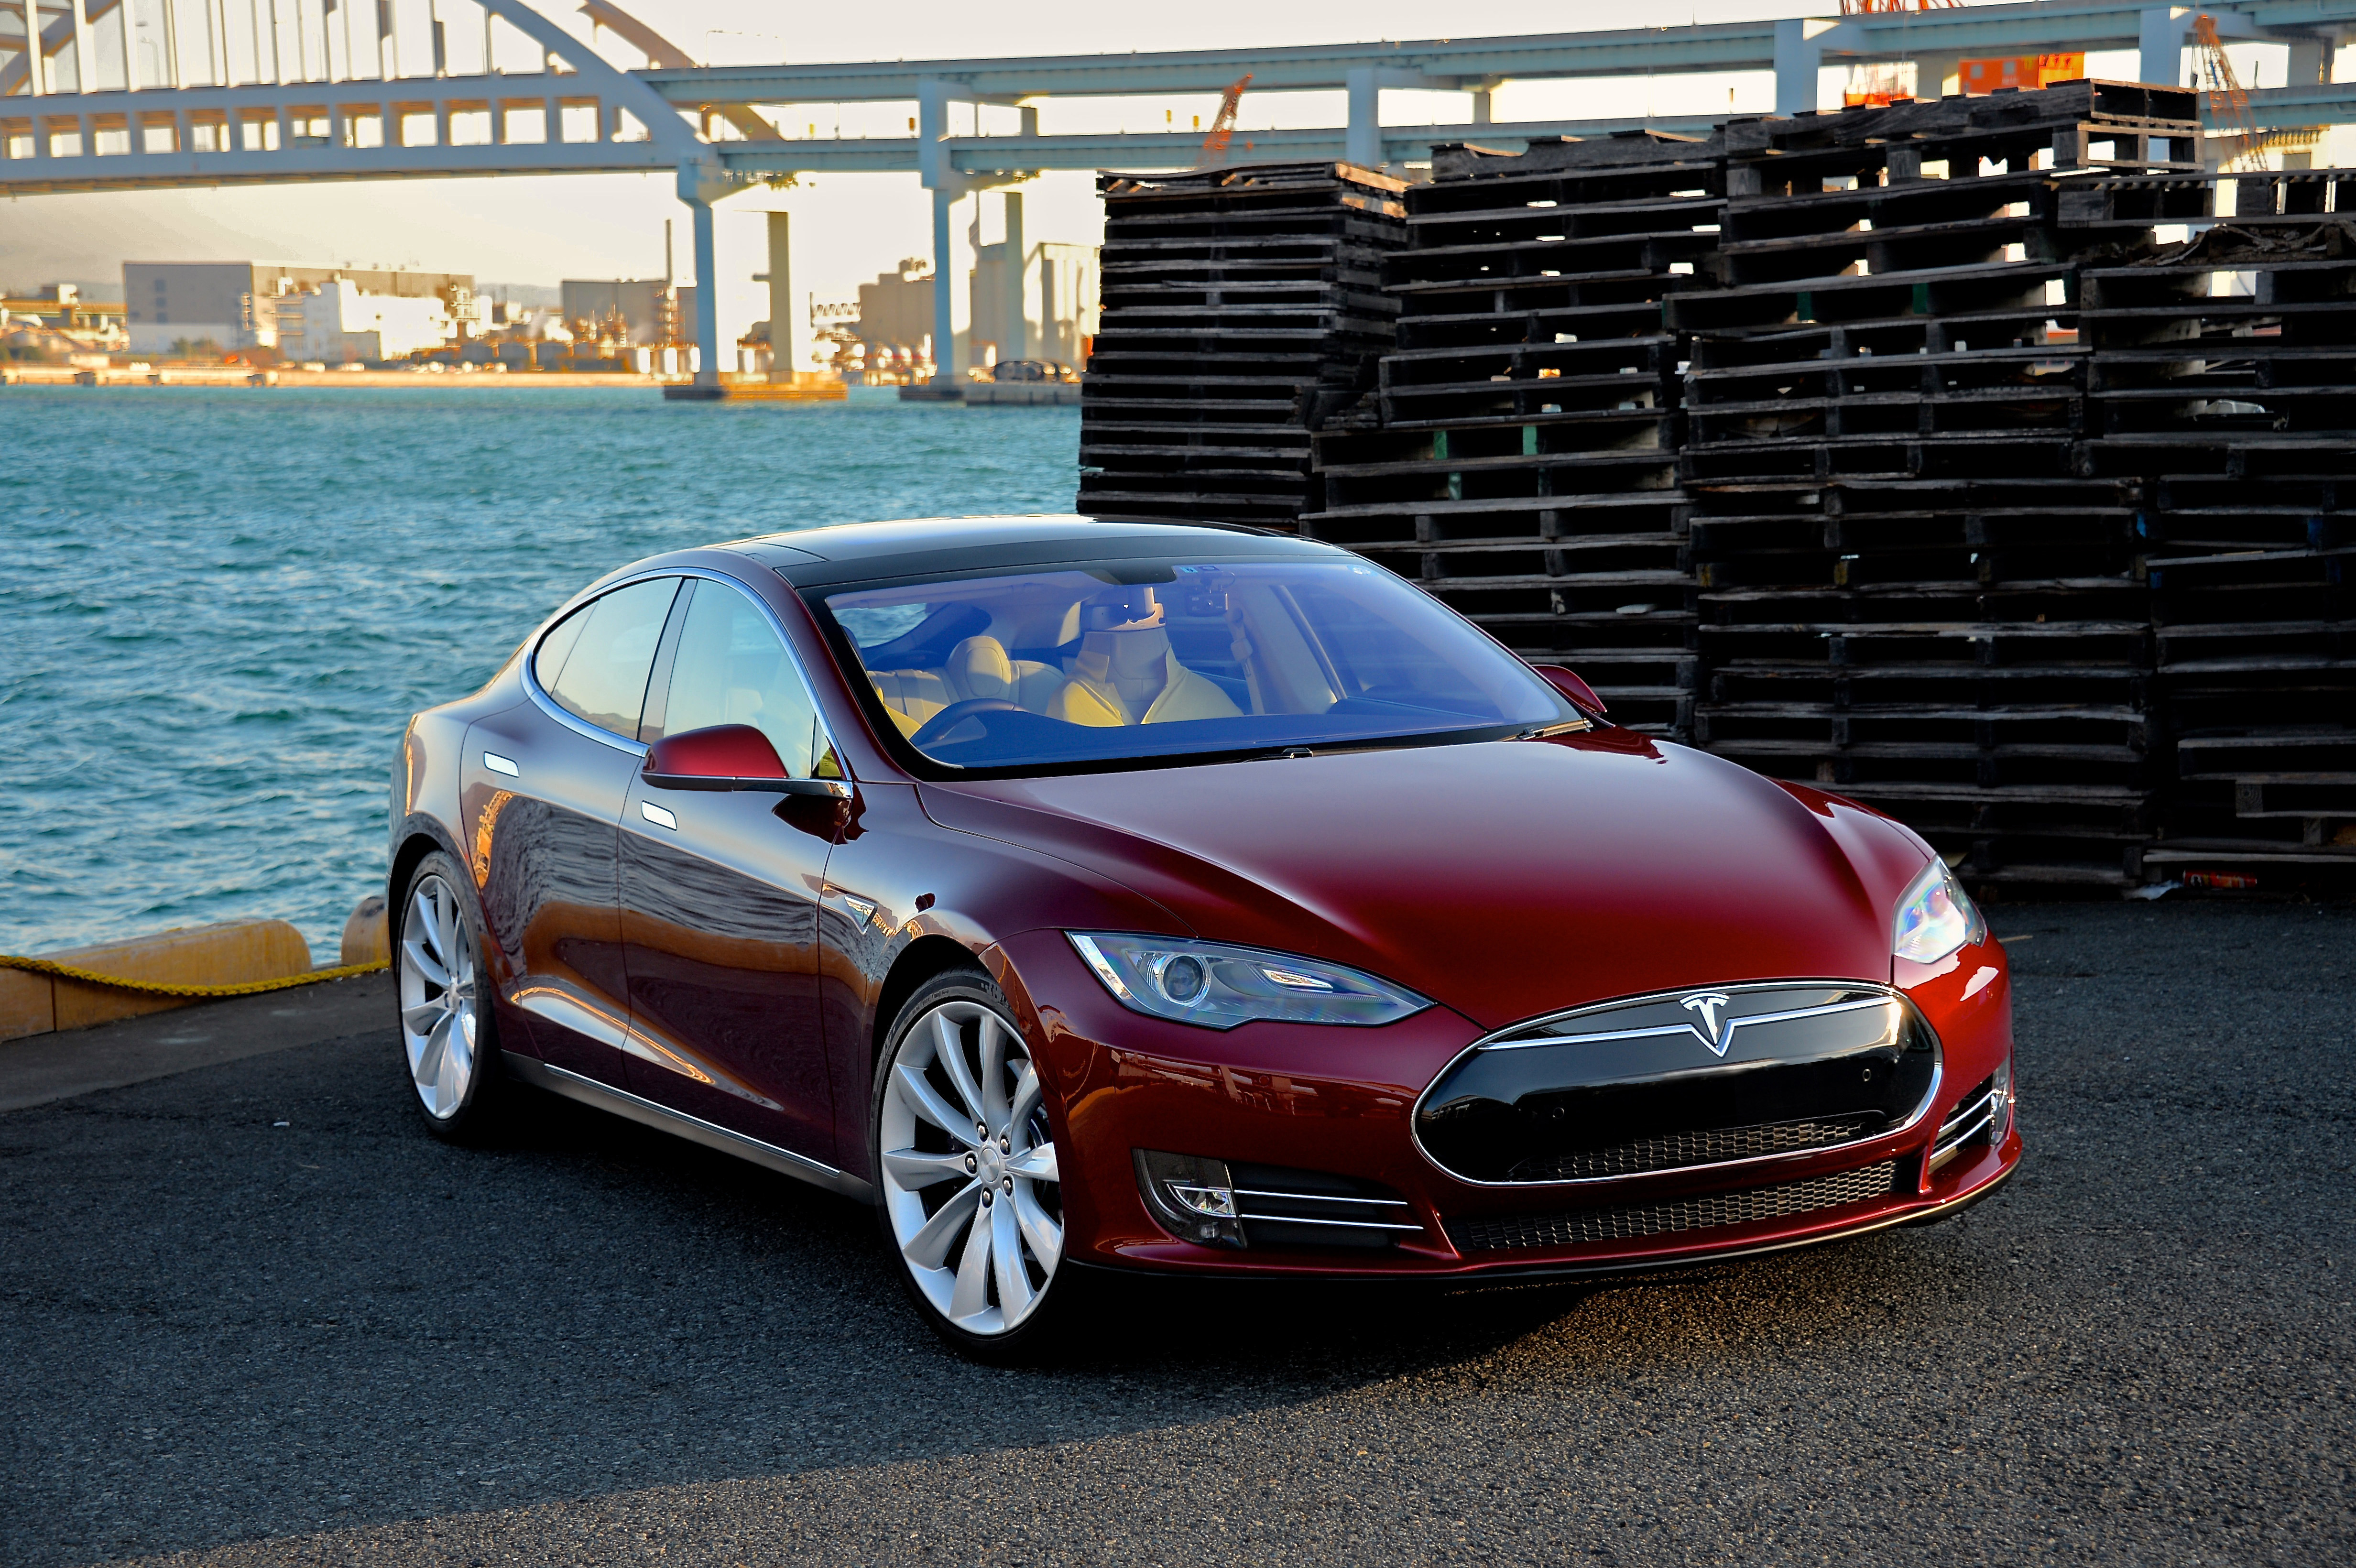 Тесла какой машина. Тесла model s. Модель s Tesla. Автомобиль Tesla model s. Электромобиль Тесла модель s 2020.